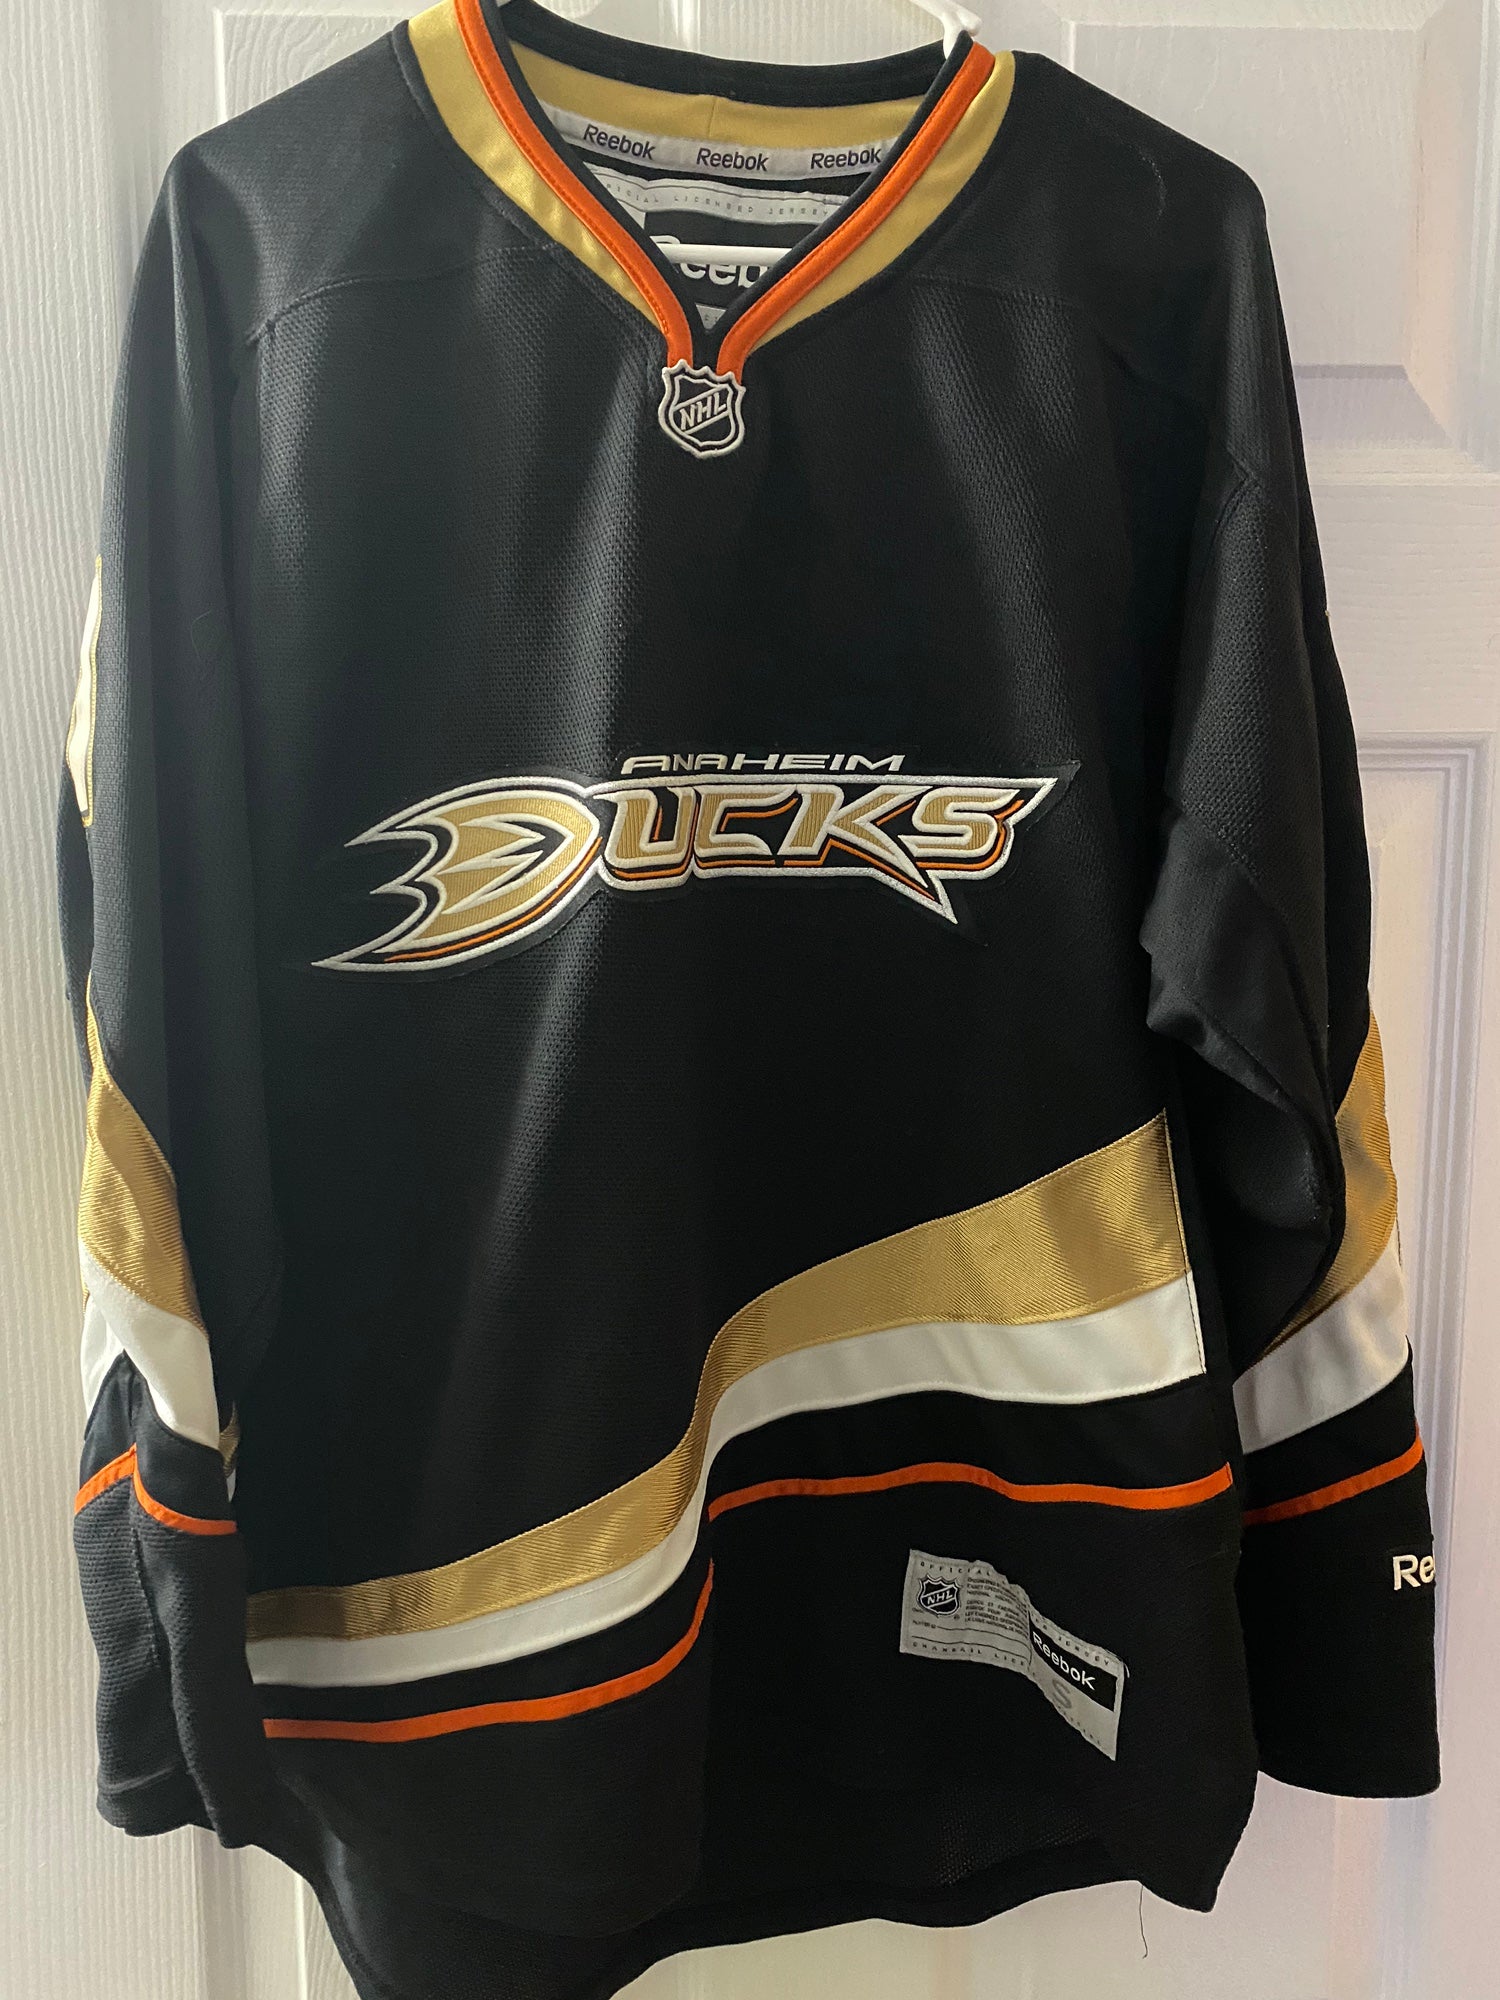 Anaheim Ducks Hockey Jerseys - collectibles - by owner - sale